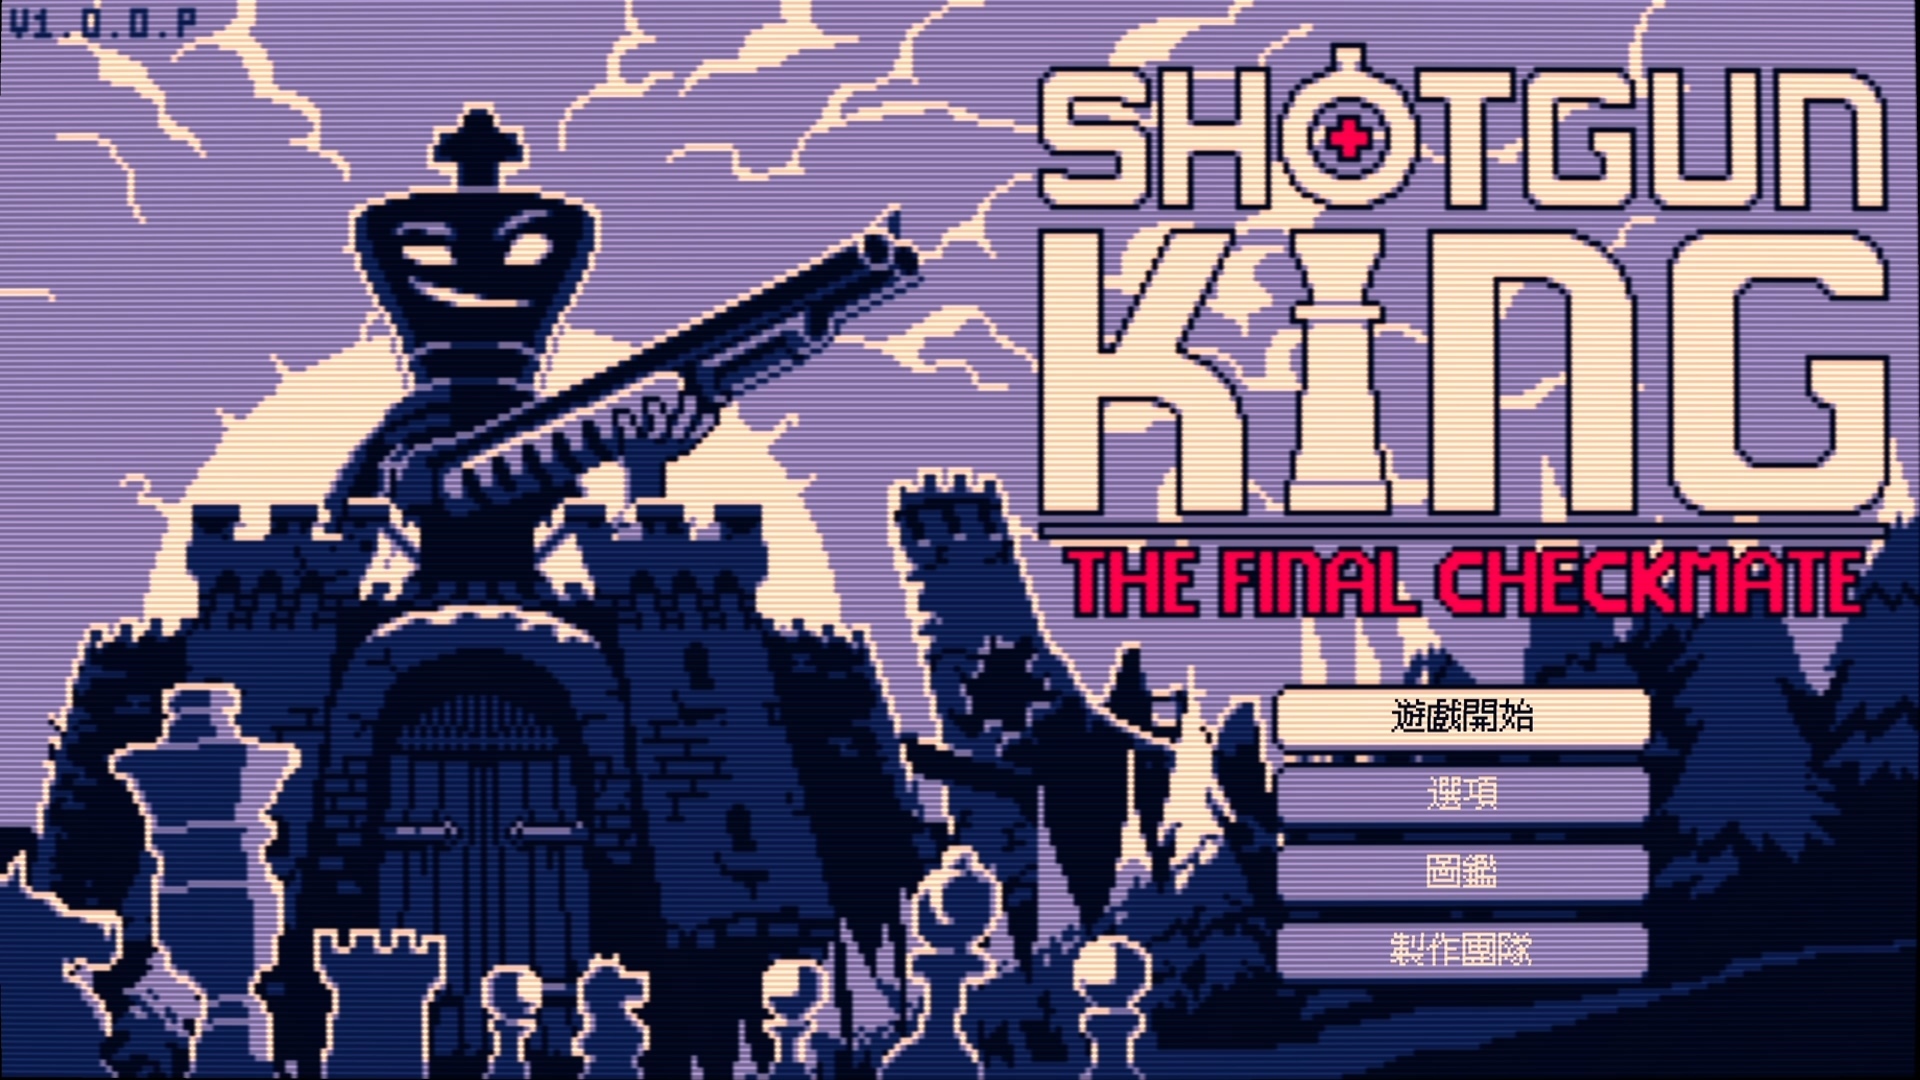 Shotgun King: The Final Checkmate for PlayStation 5